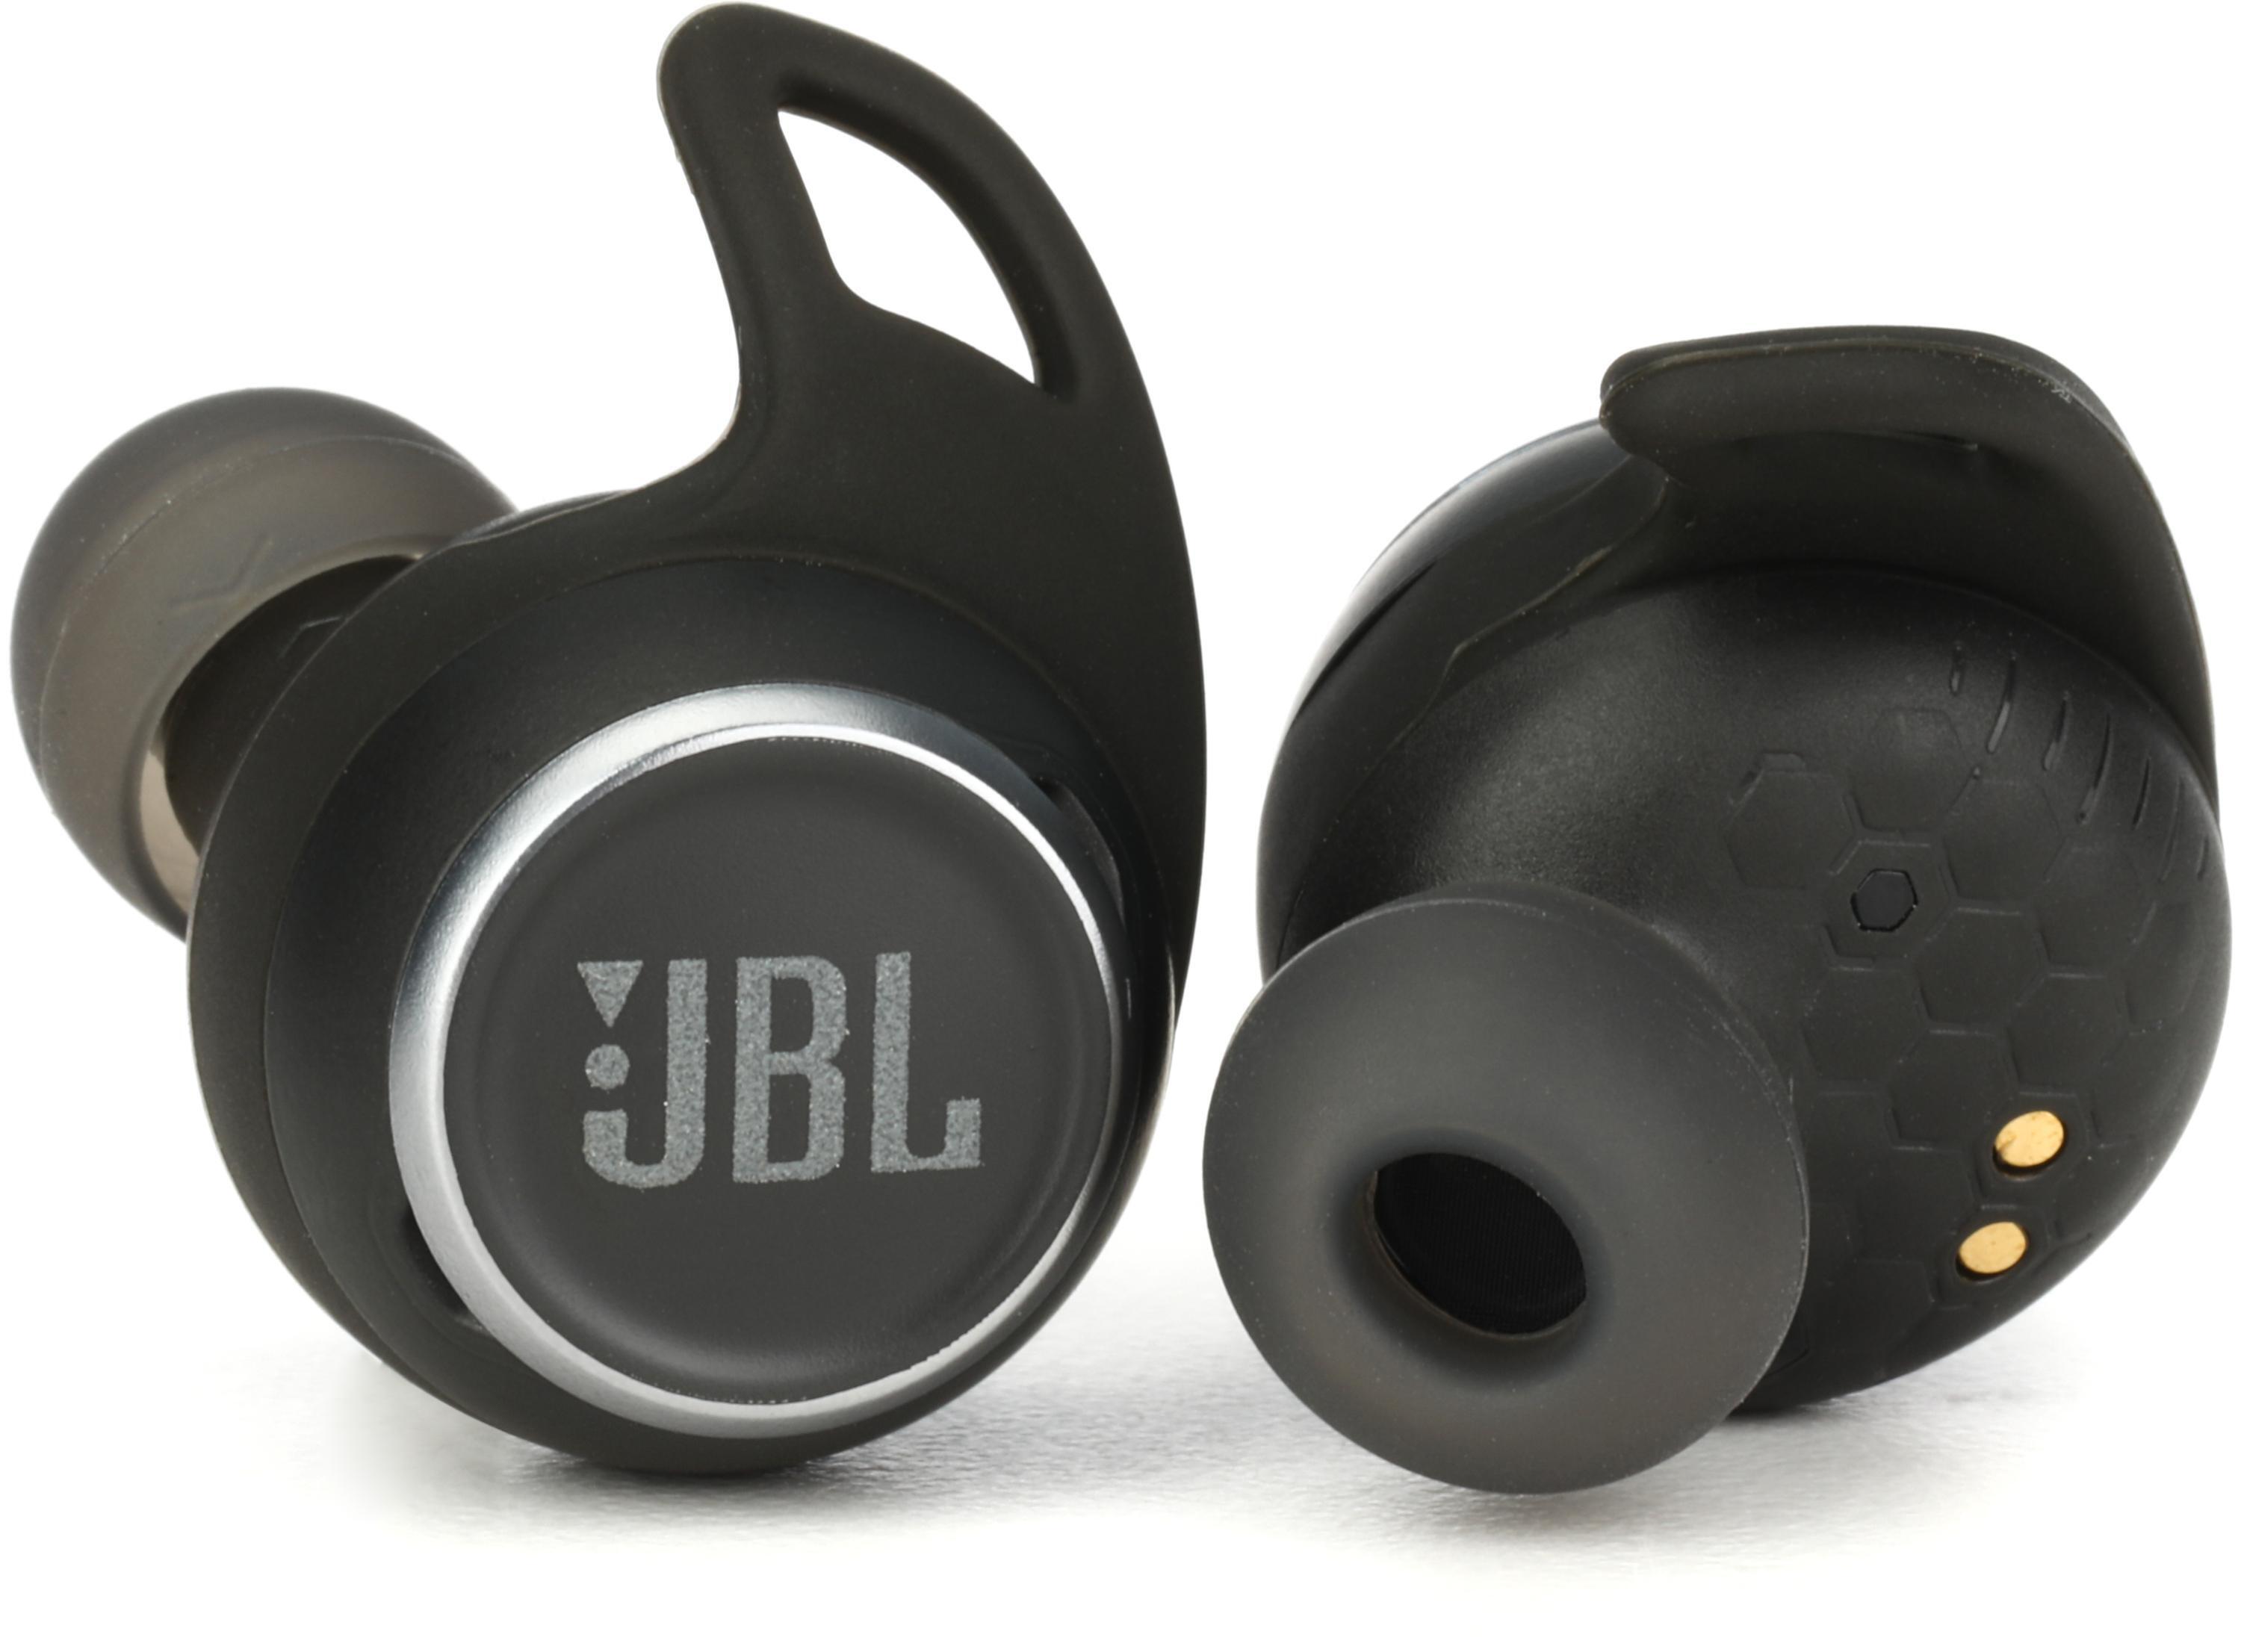 Aero - Lifestyle True Wireless Reflect JBL Earbuds Black | Sweetwater